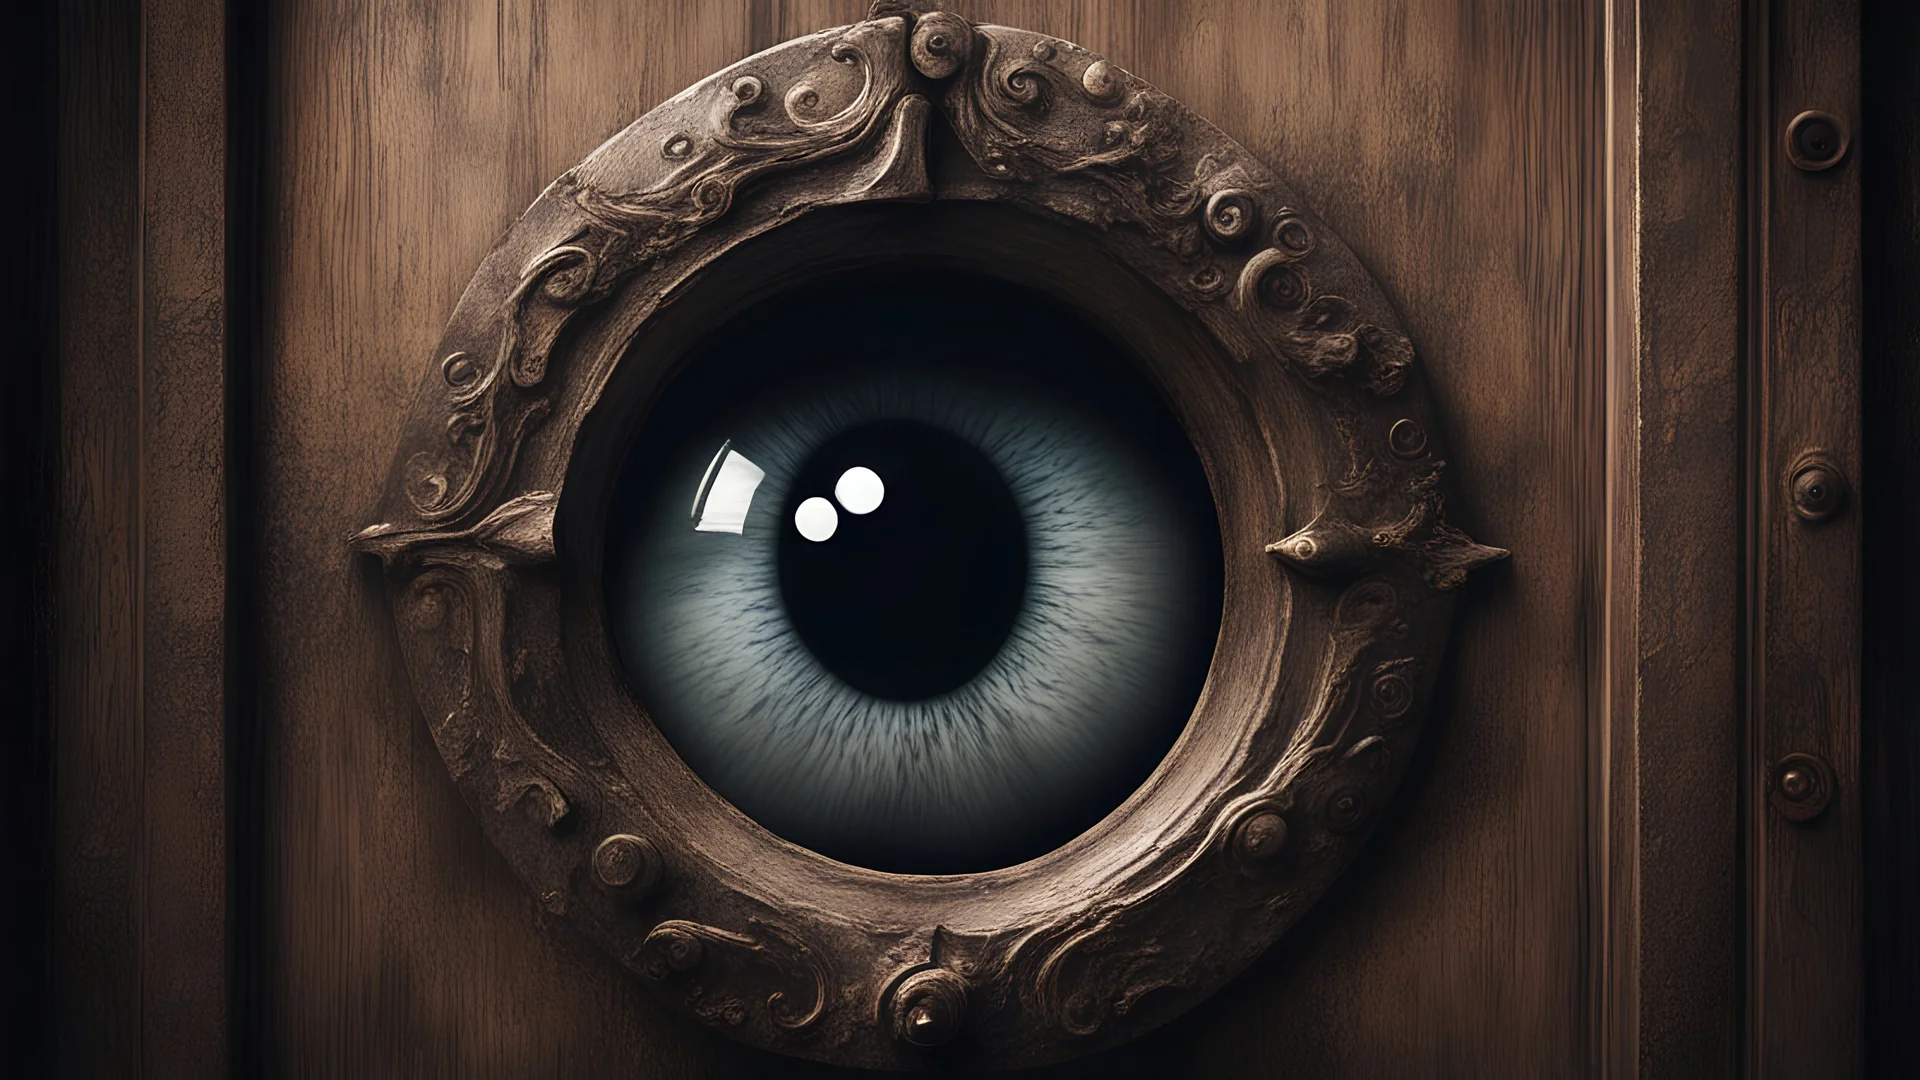 (masterpiece), eye, looking through the keyhole of door, dark horor art style, extreme quality, old door keyhole, realistic eyes, old door